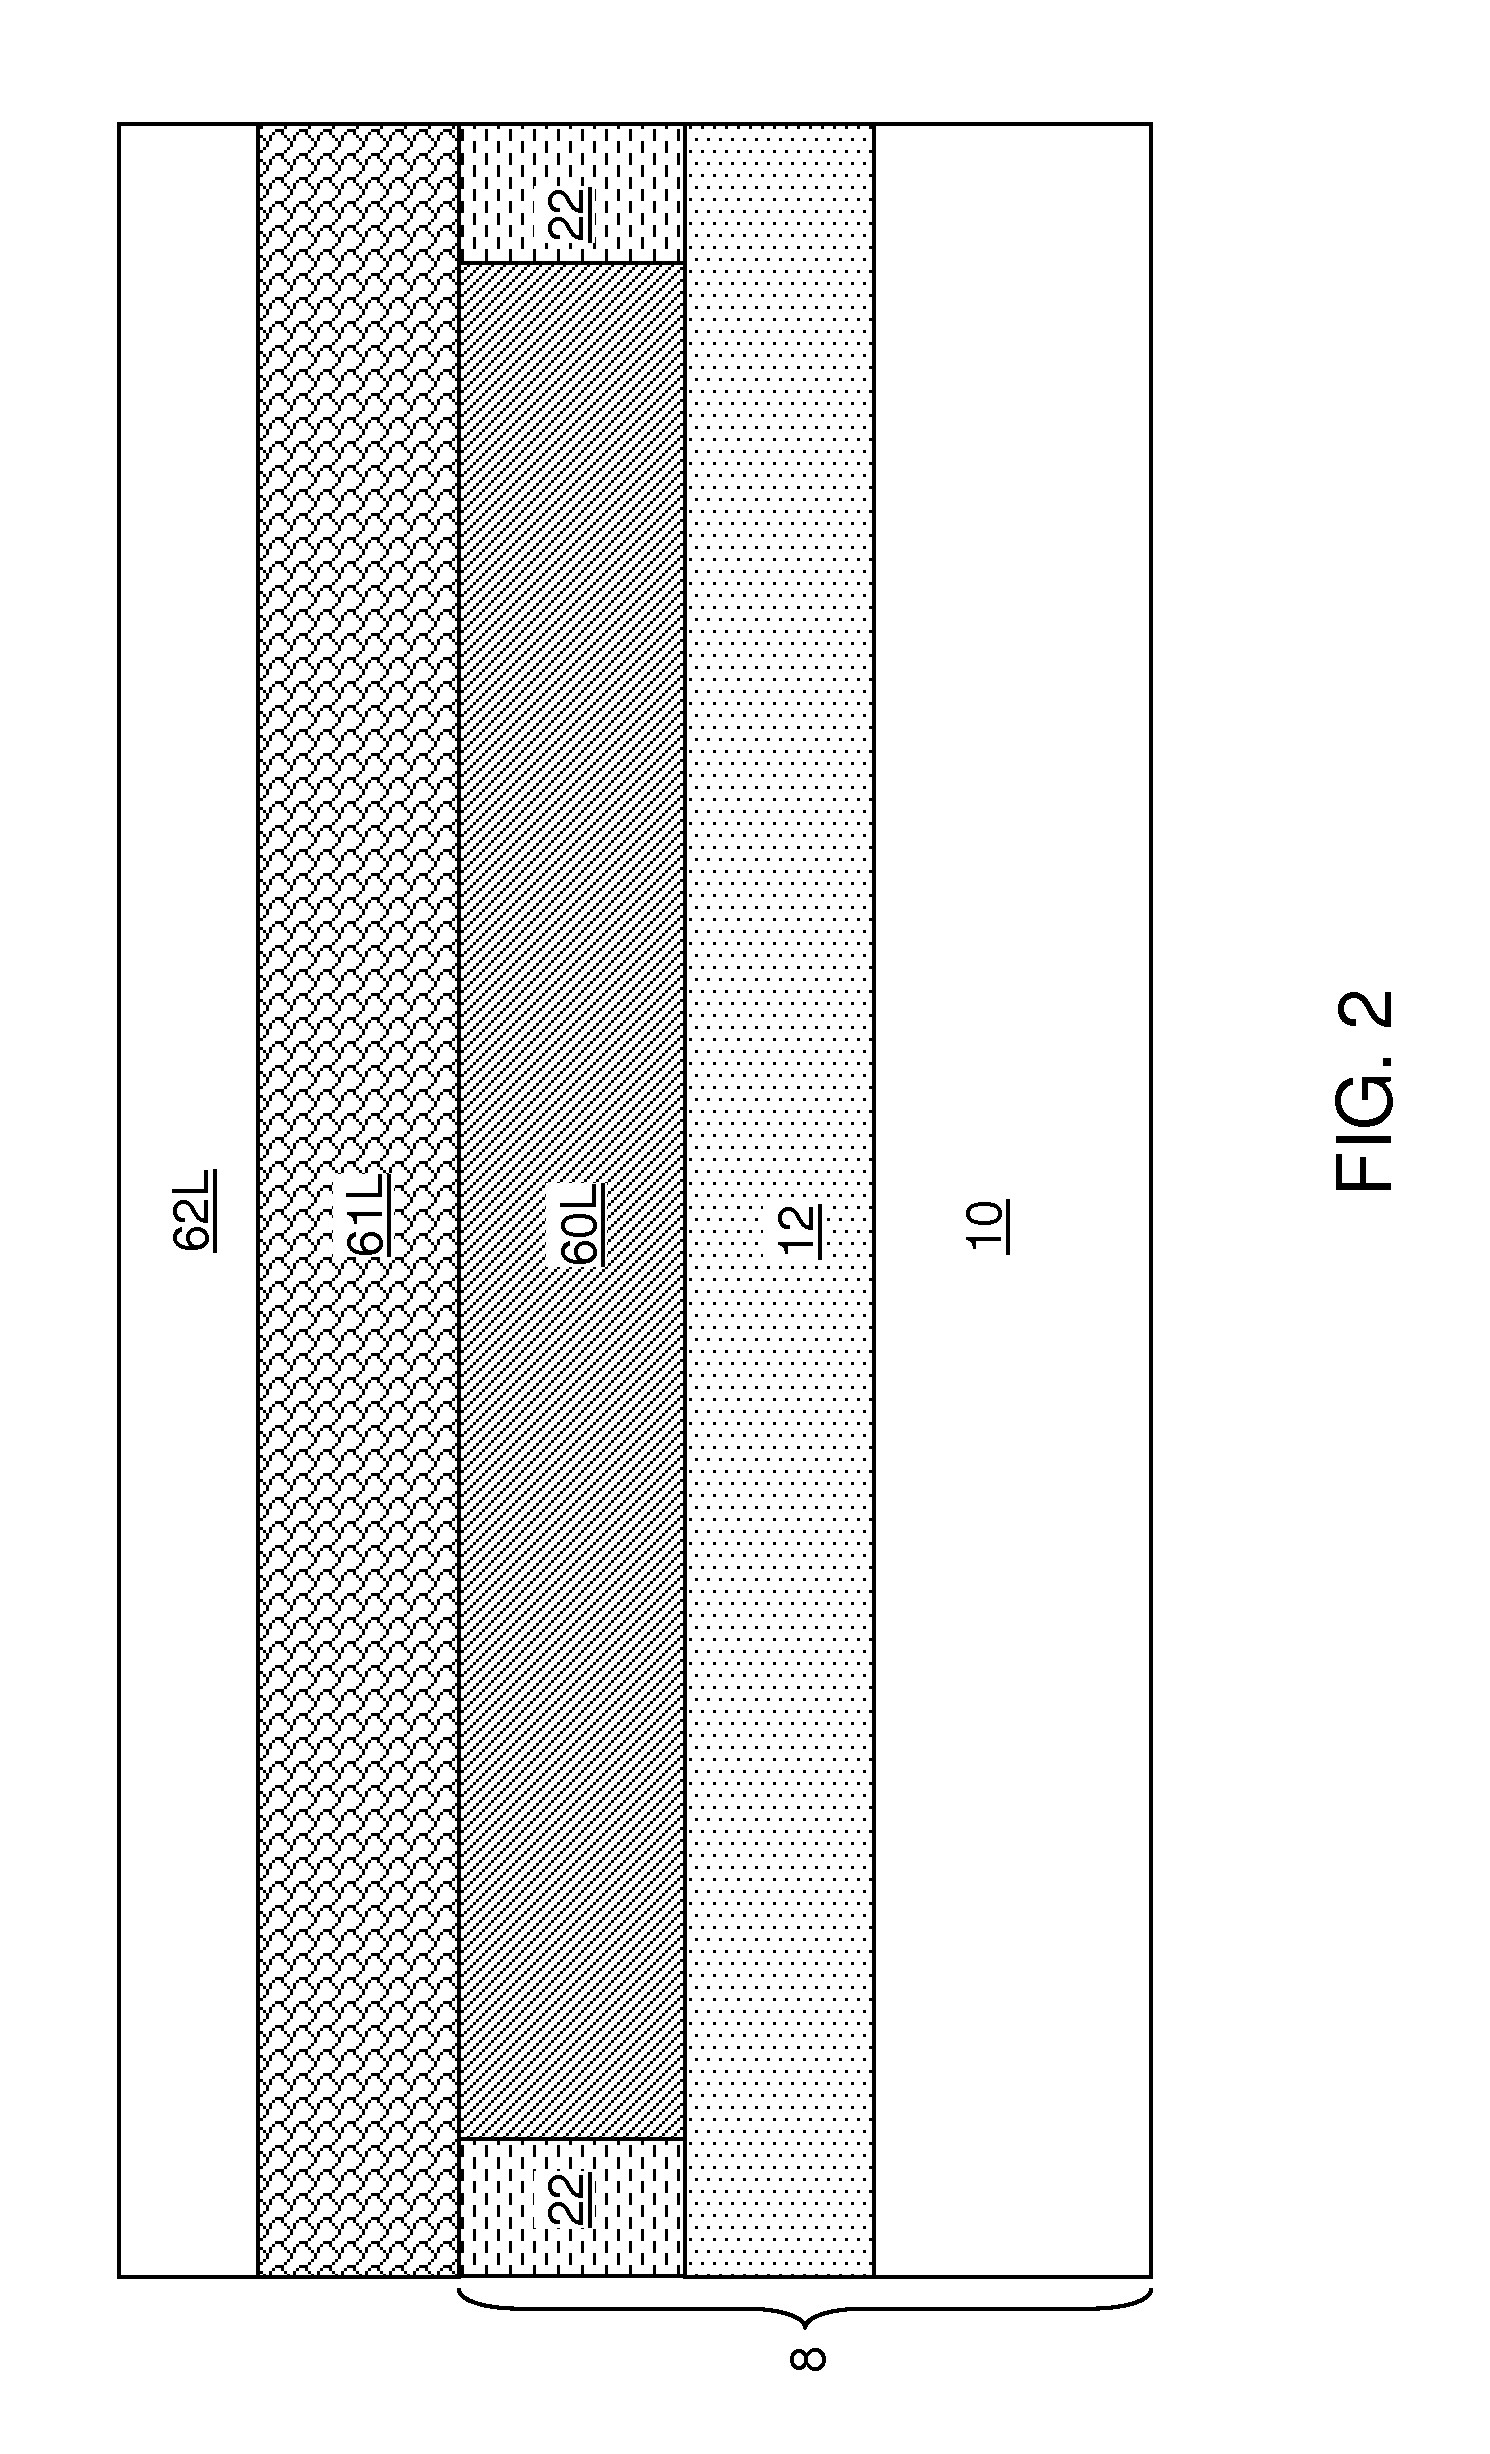 Horizontal polysilicon-germanium heterojunction bipolar transistor